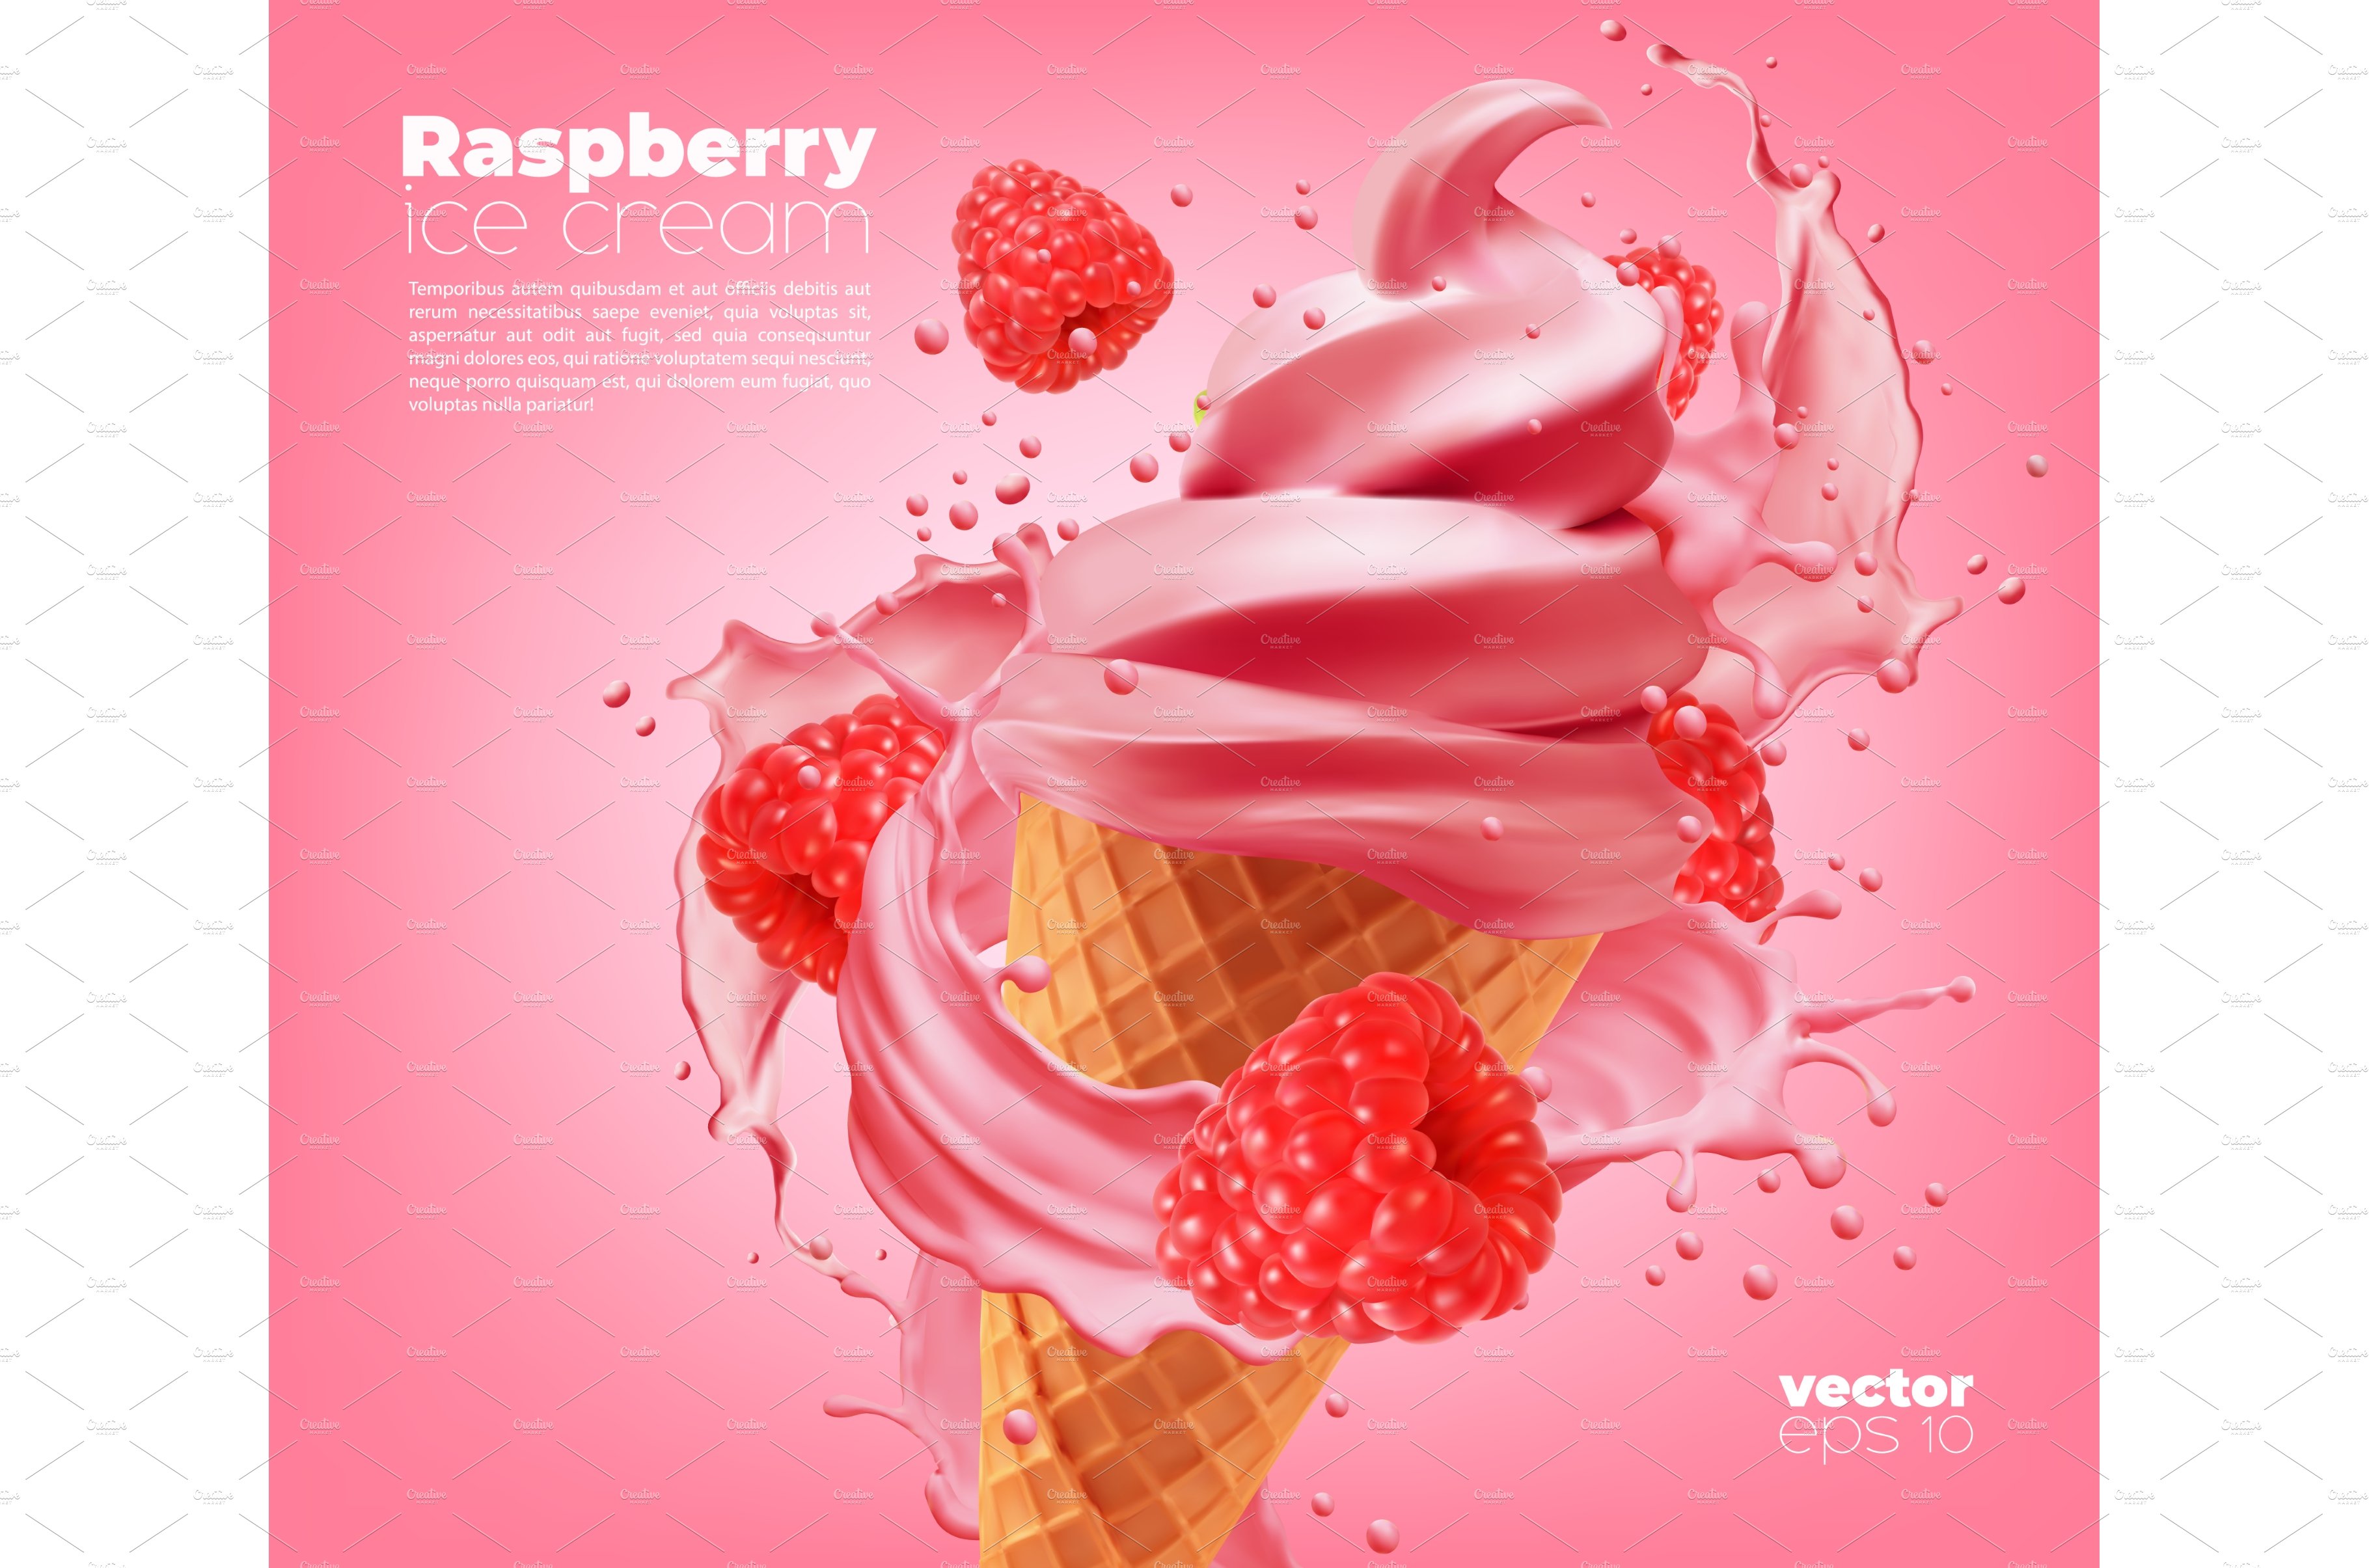 Raspberry soft ice cream cone cover image.